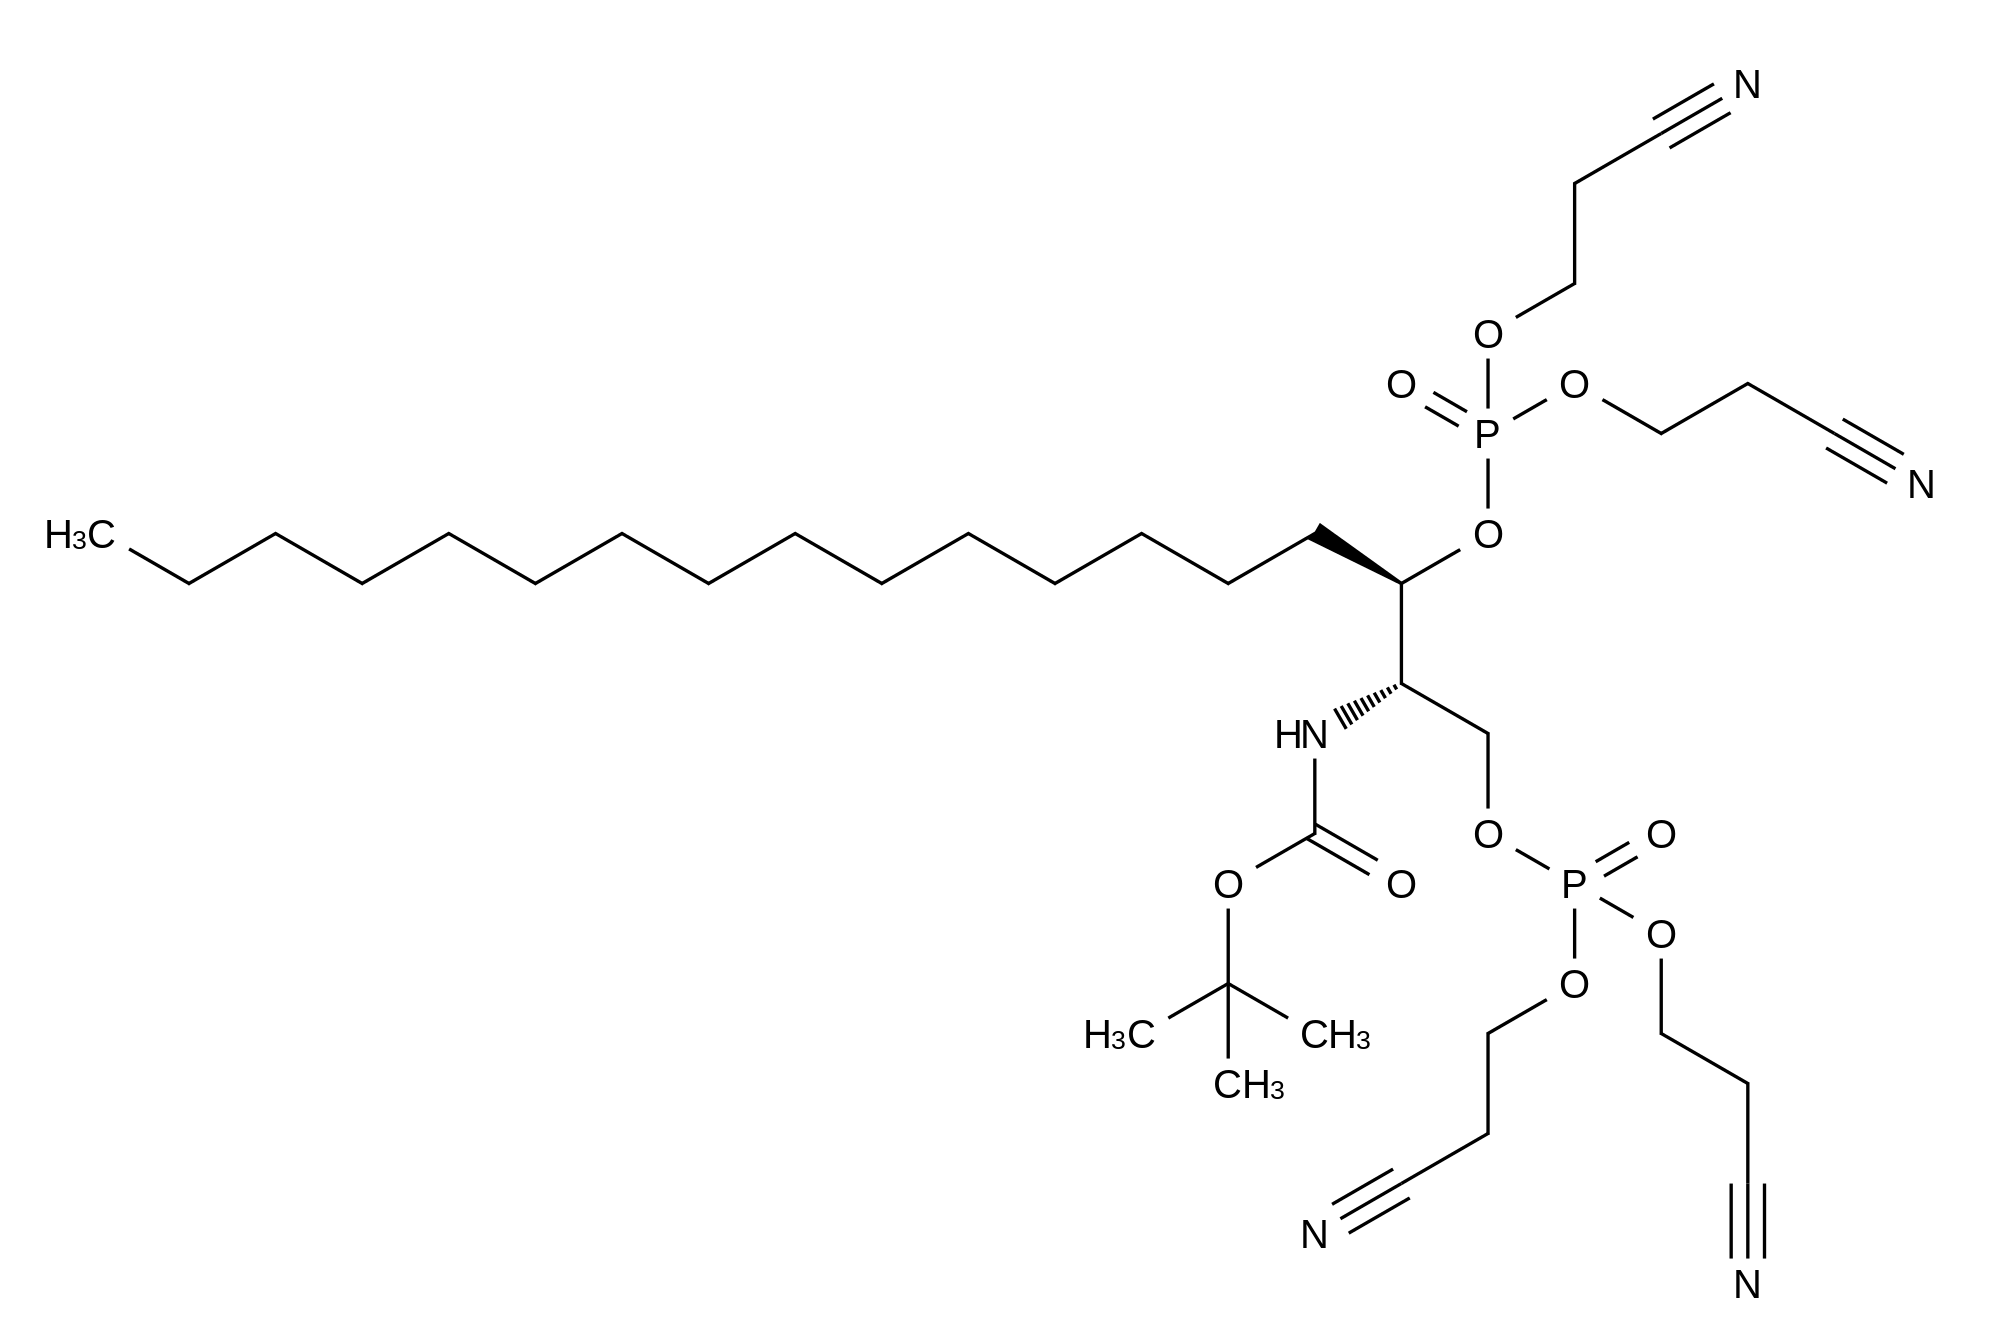 N-tert-Butyloxycarbonyl-D-erythro-dihydro-D-sphingosine-1,3-di-O-(phosphate Dicyanoethyl Ester)